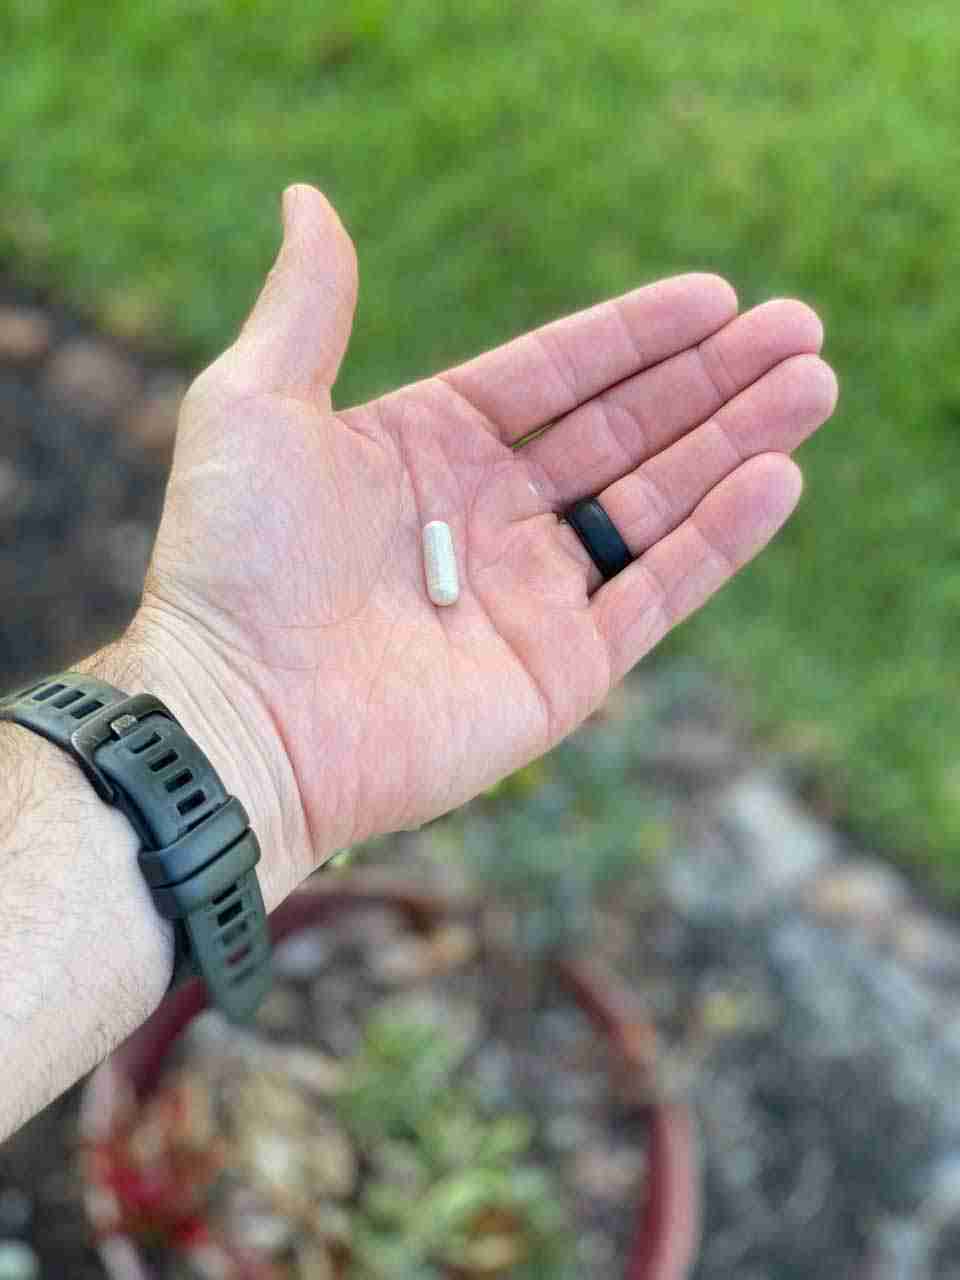 Mag R&R capsules are size "0" (small) capsules.